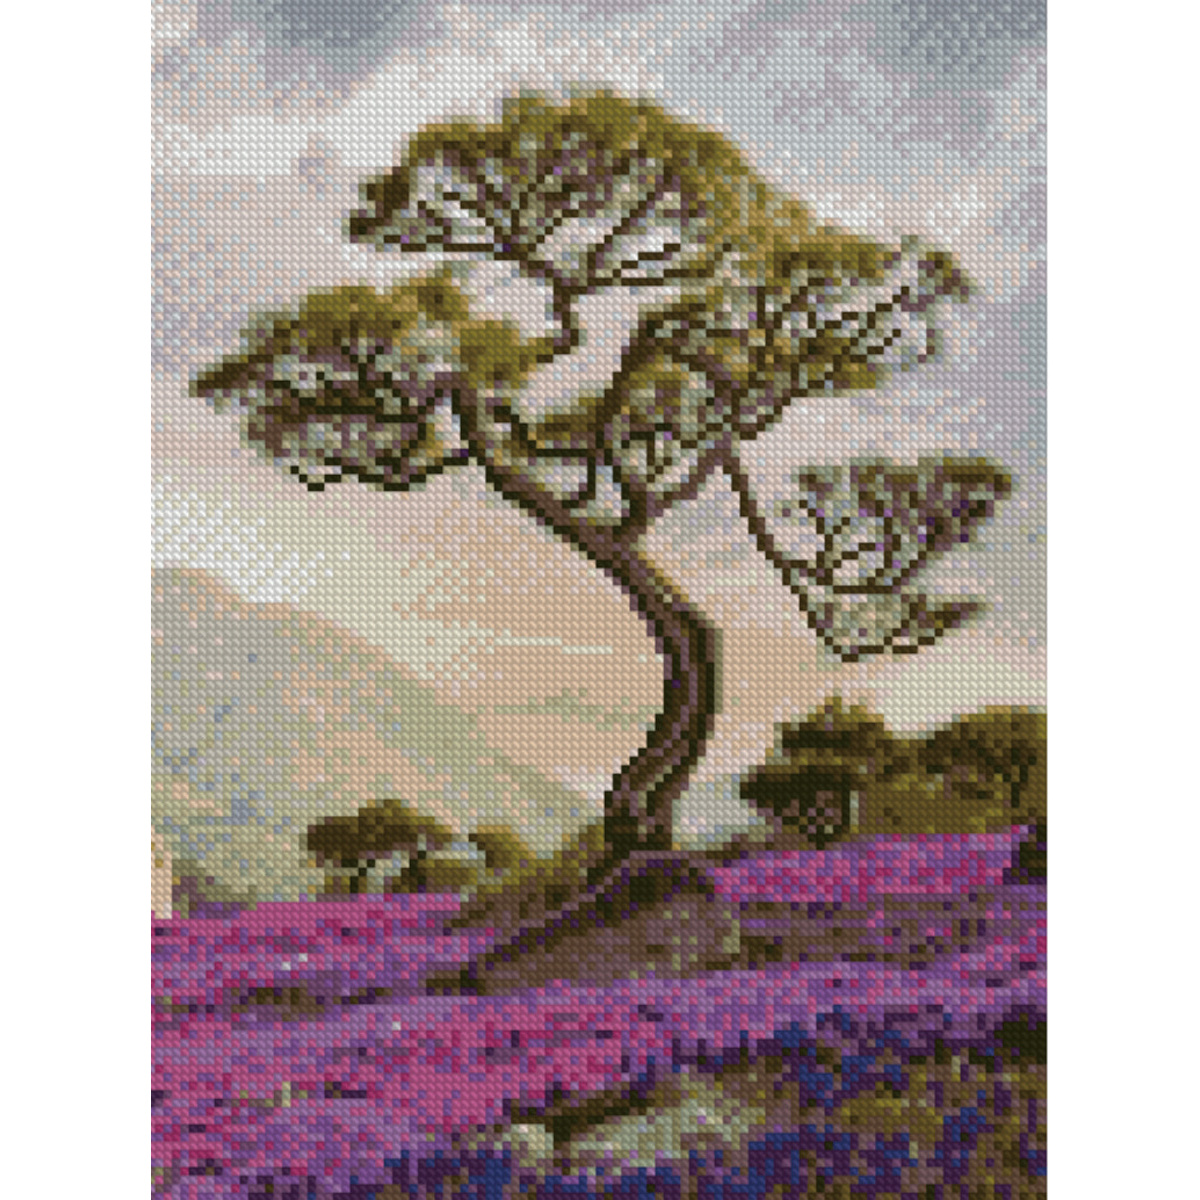 Diamond mosaic Premium HX181 "Mysterious tree", size 30x40 cm